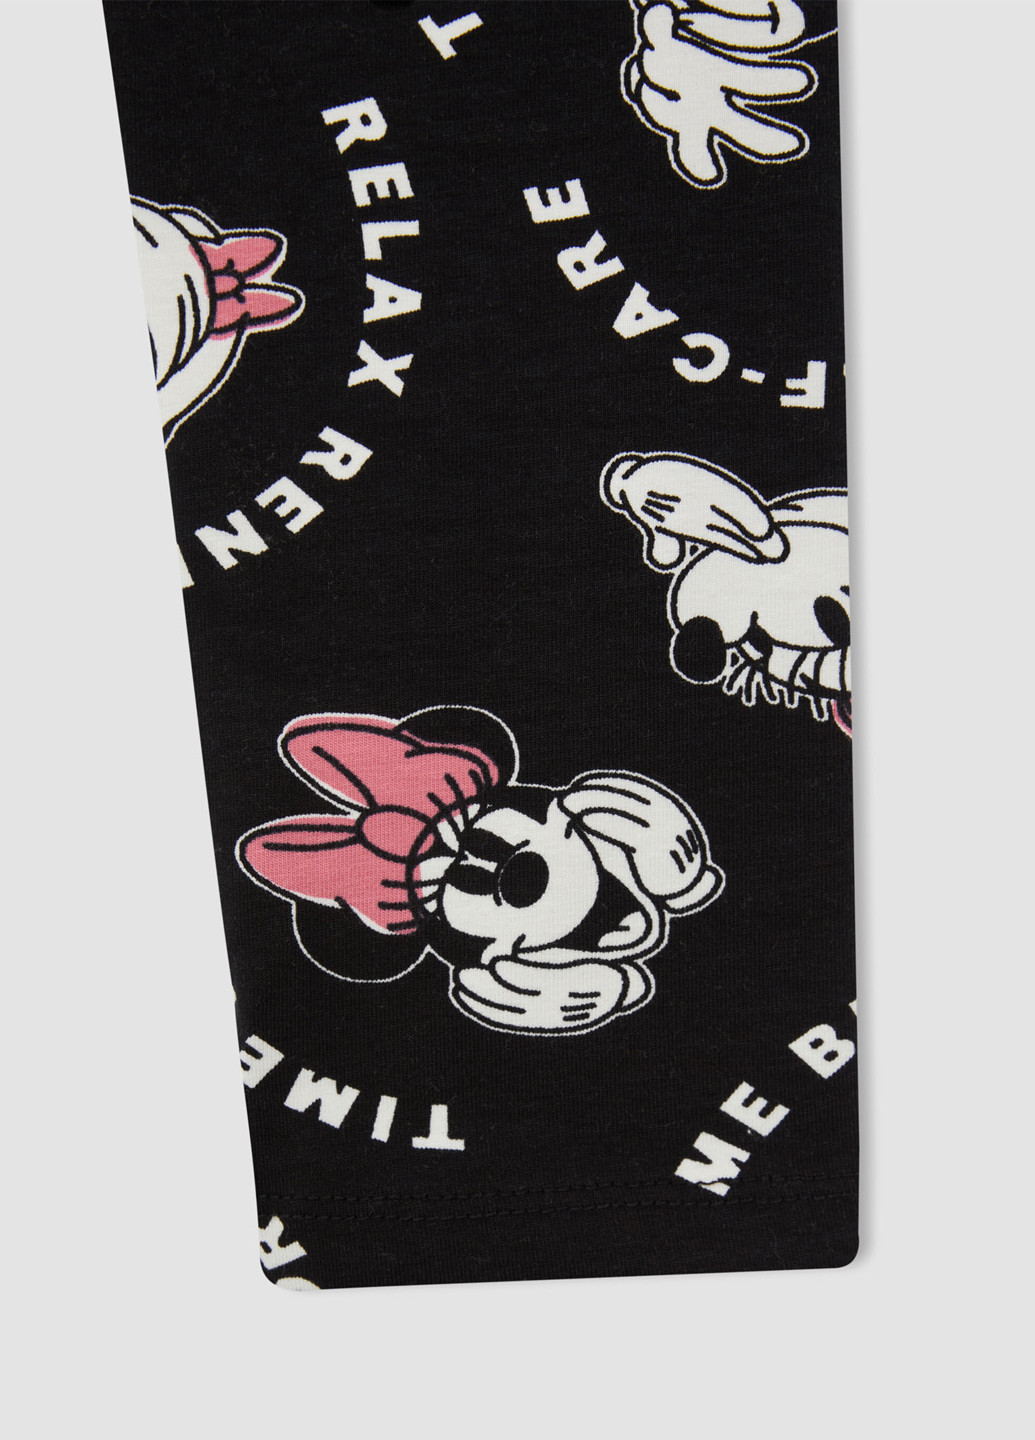 Черно-белый демисезонный mickey & minnie (standard characters) брючный DeFacto Трикотажный комплект